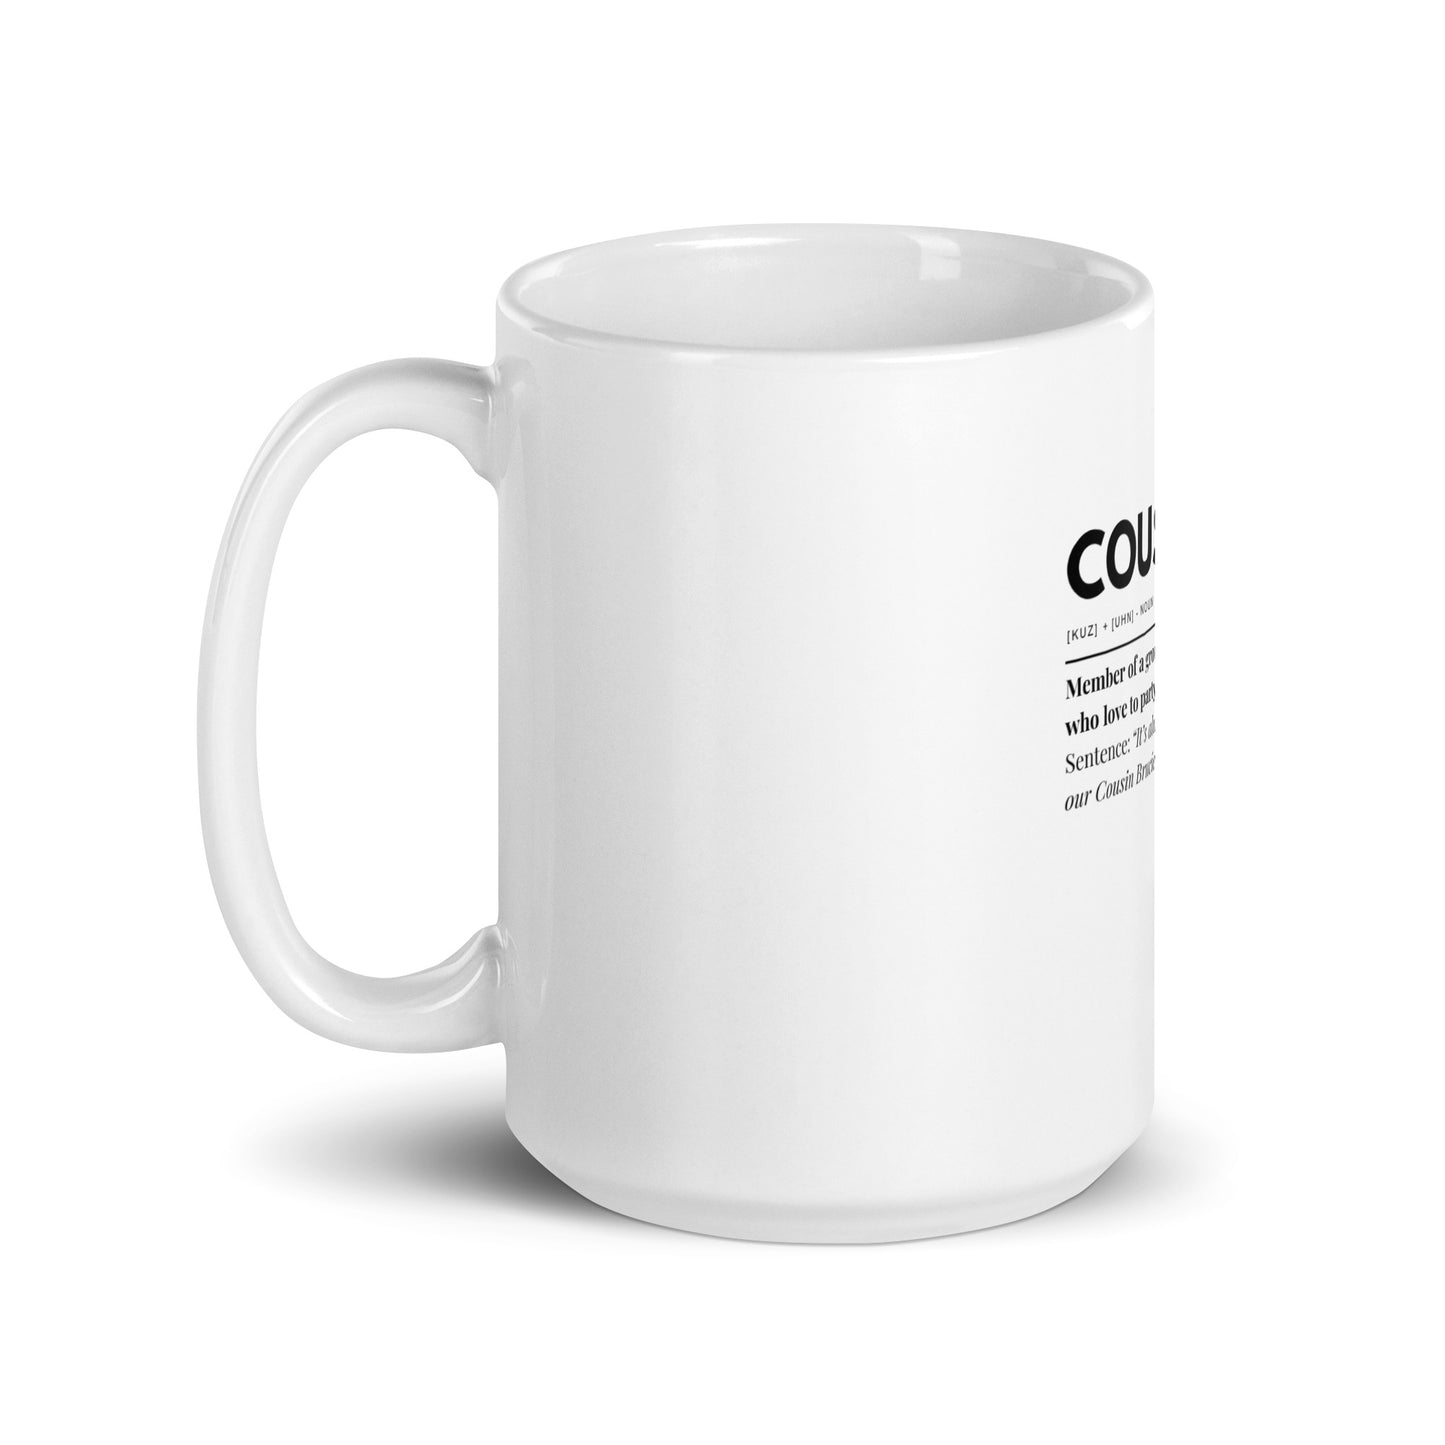 Cousin Definition White glossy mug